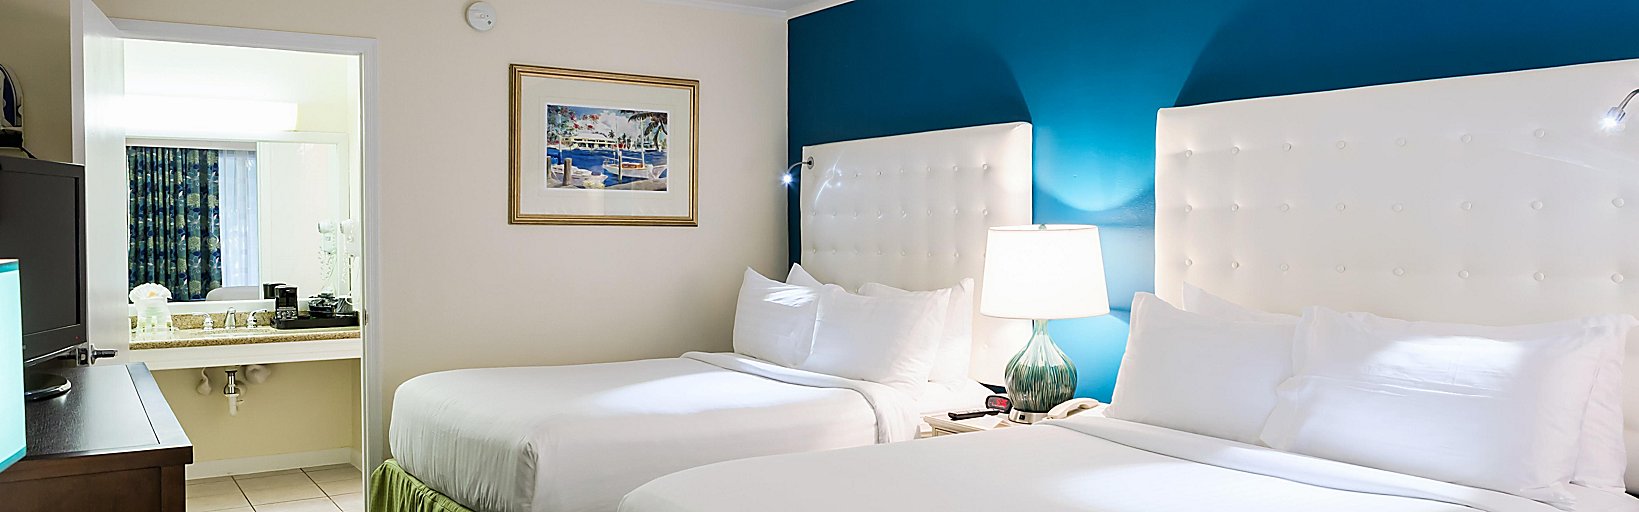 Holiday Inn Key Largo Hotels Holiday Inn Key Largo Hotel Room Rates